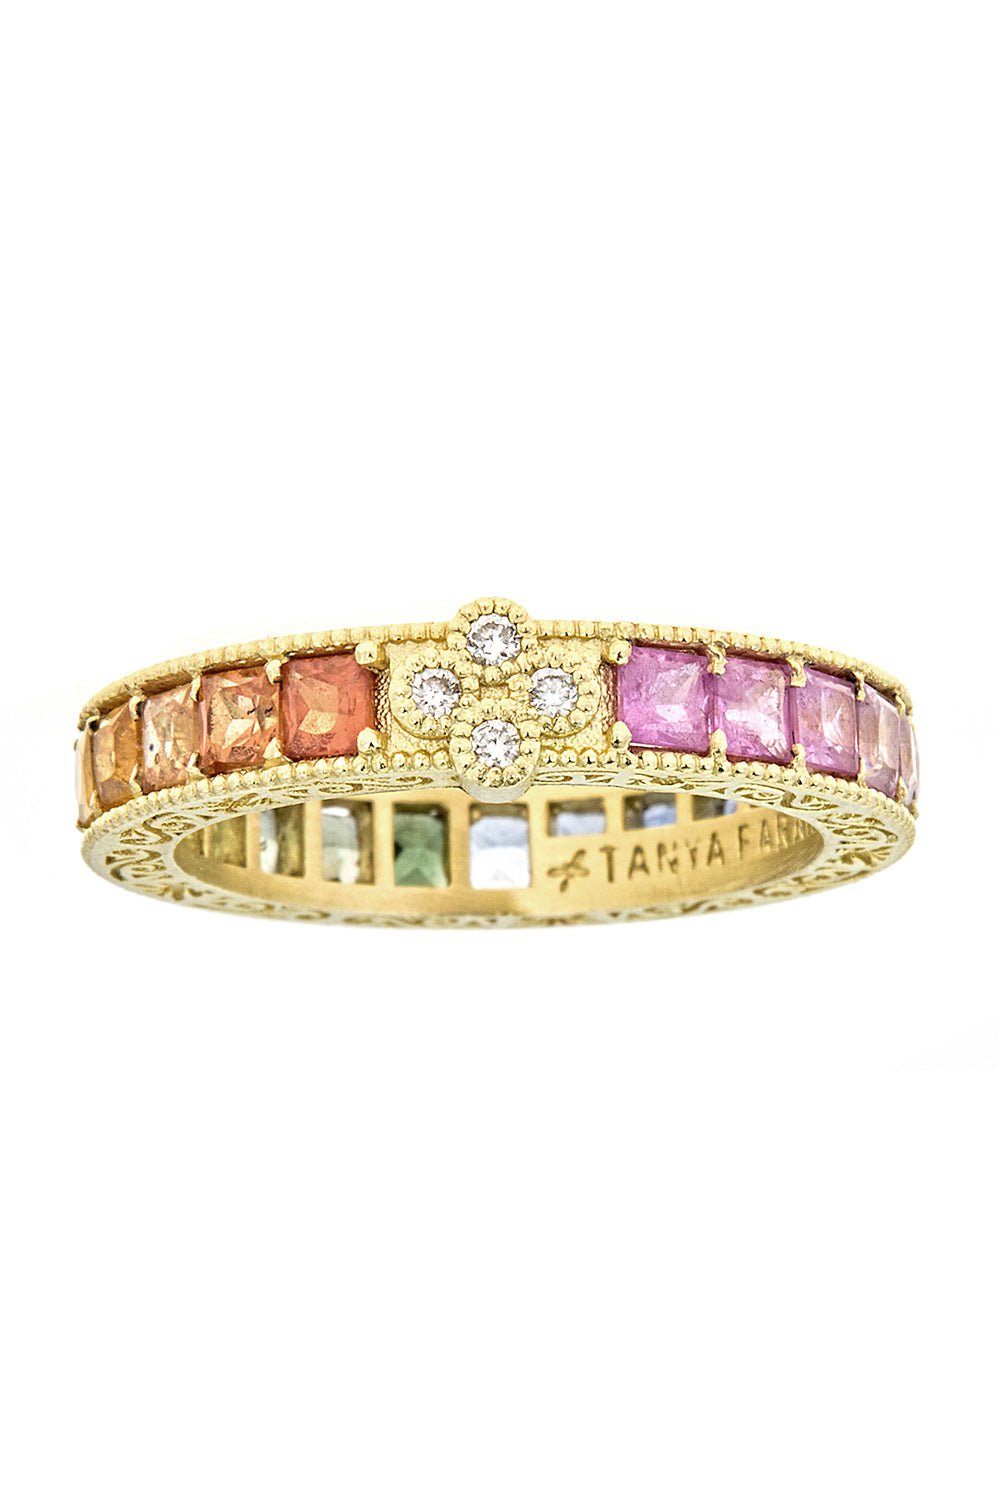 TANYA FARAH-Modern Etruscan Rainbow Sapphire Diamond Cluster Stack Ring-YELLOW GOLD